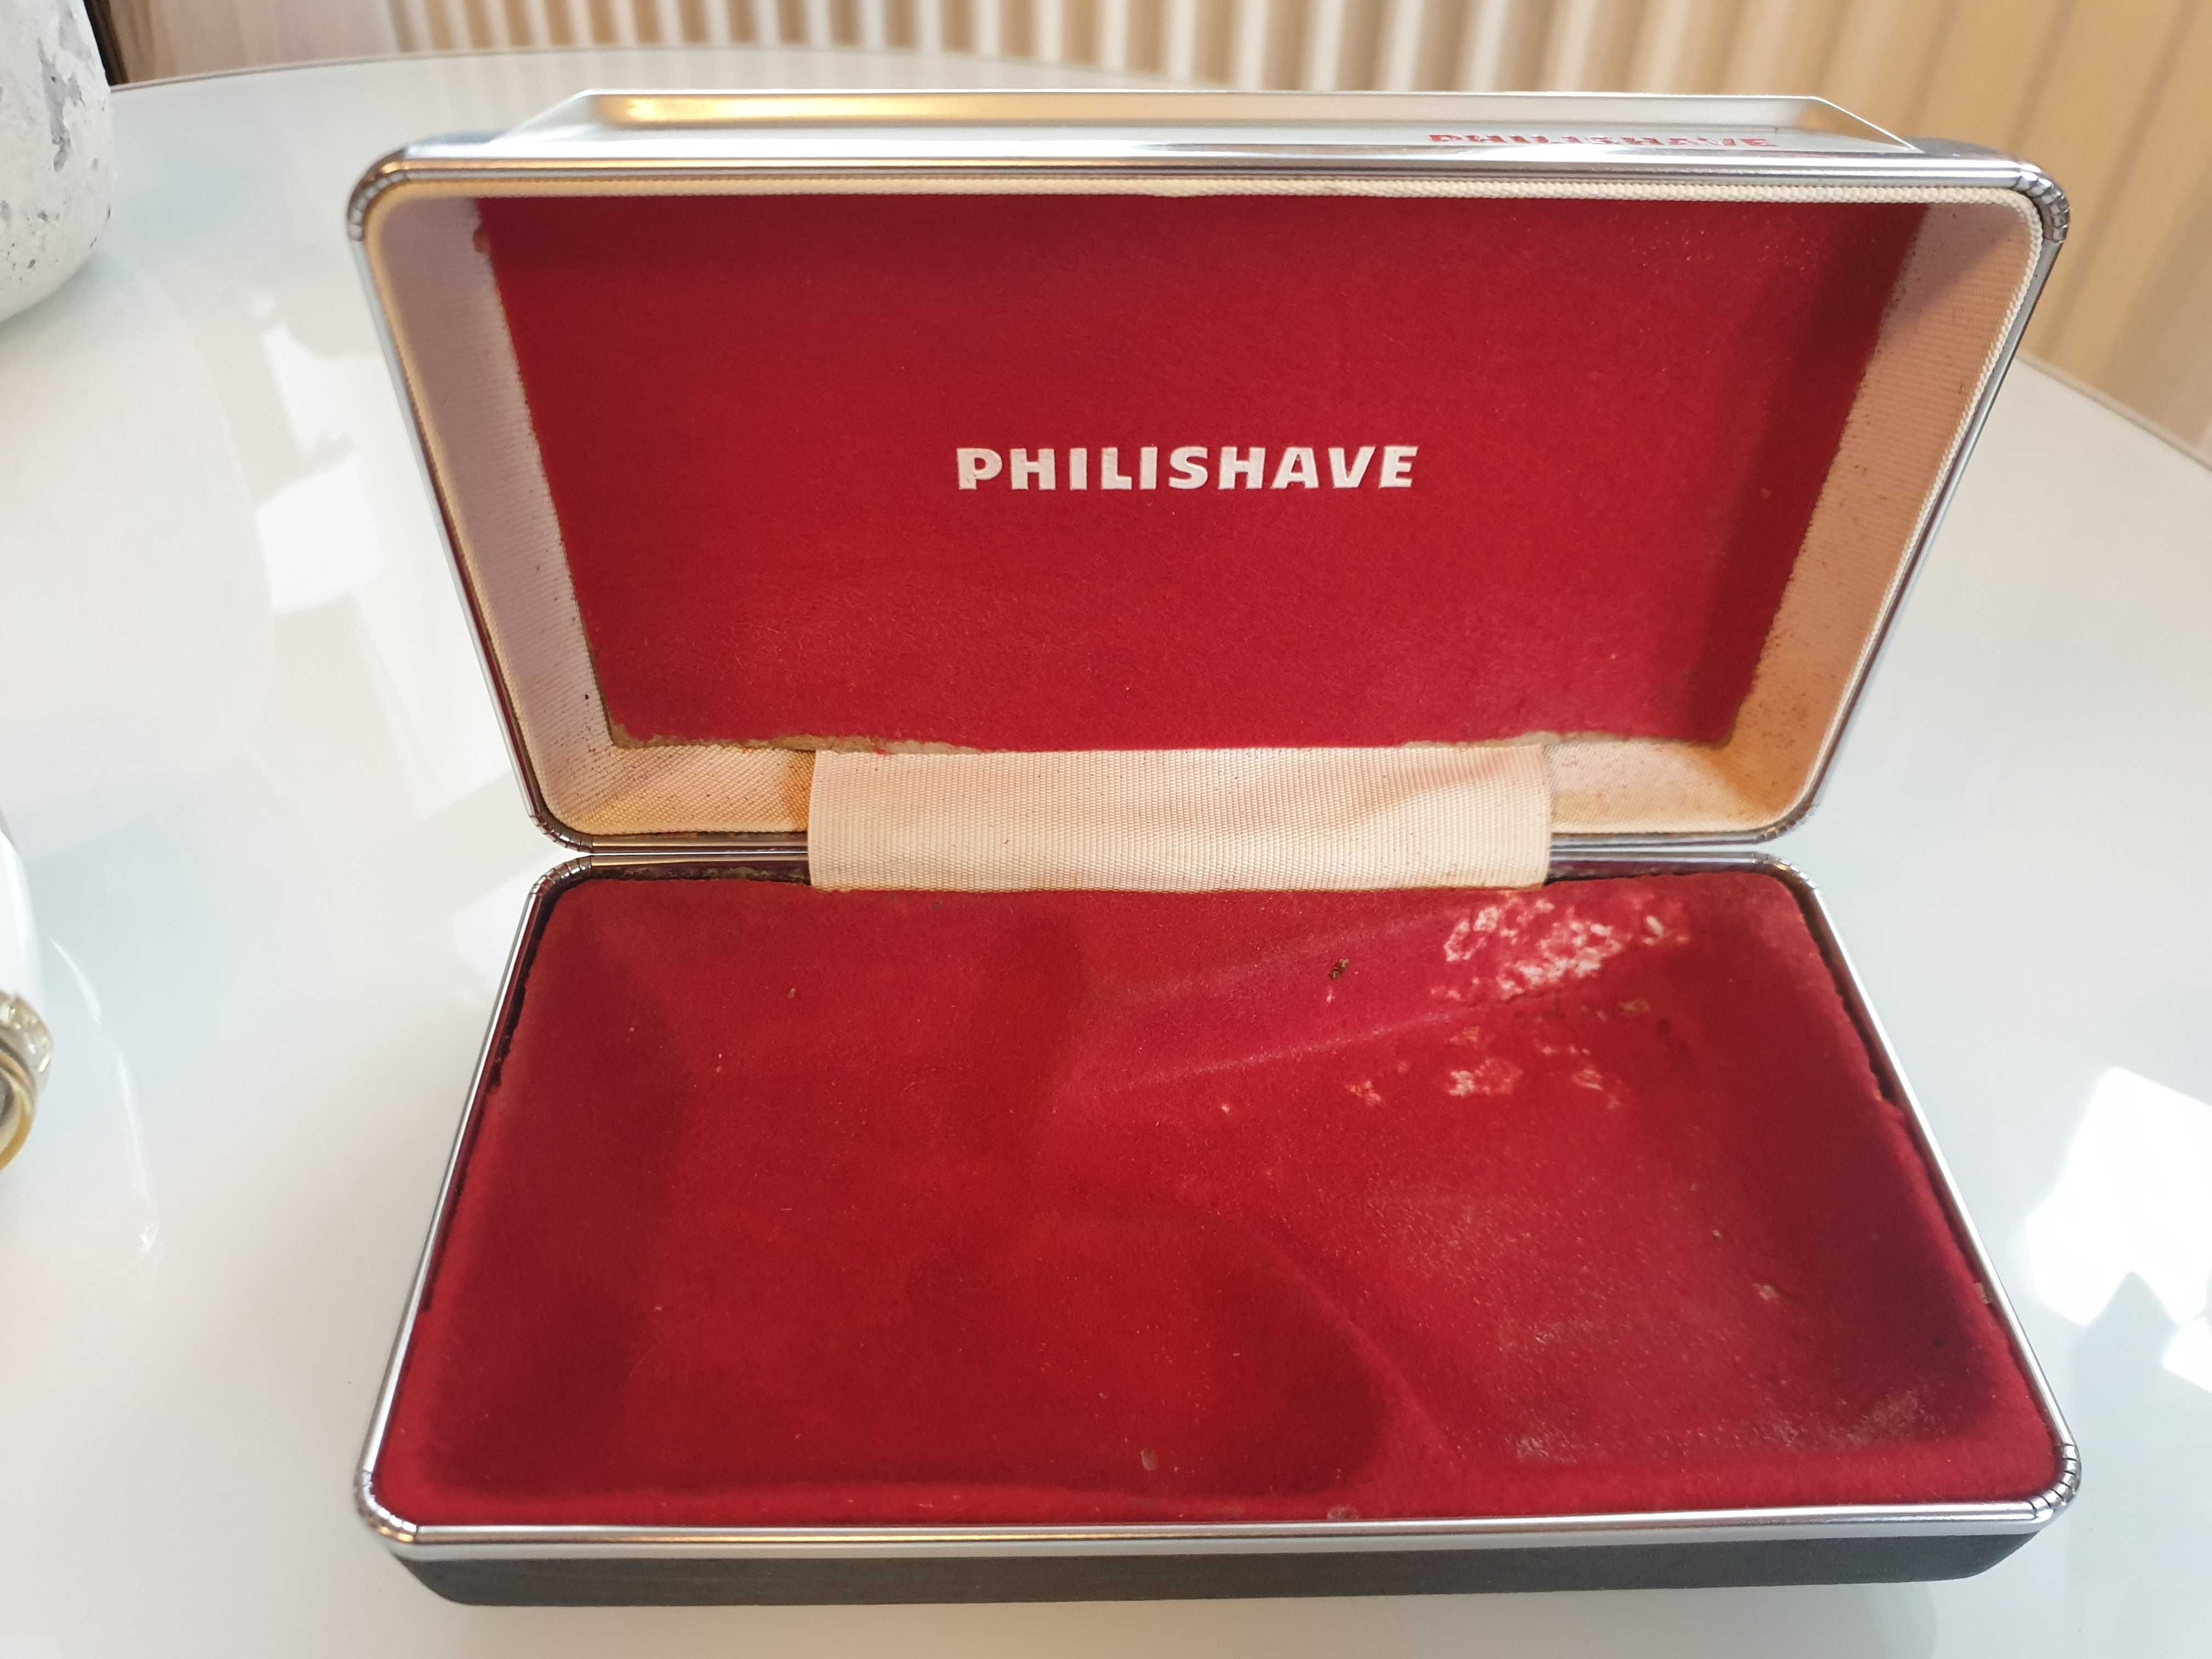 Golarka podróżna Philips Philishave SC 7960 zabytkowa